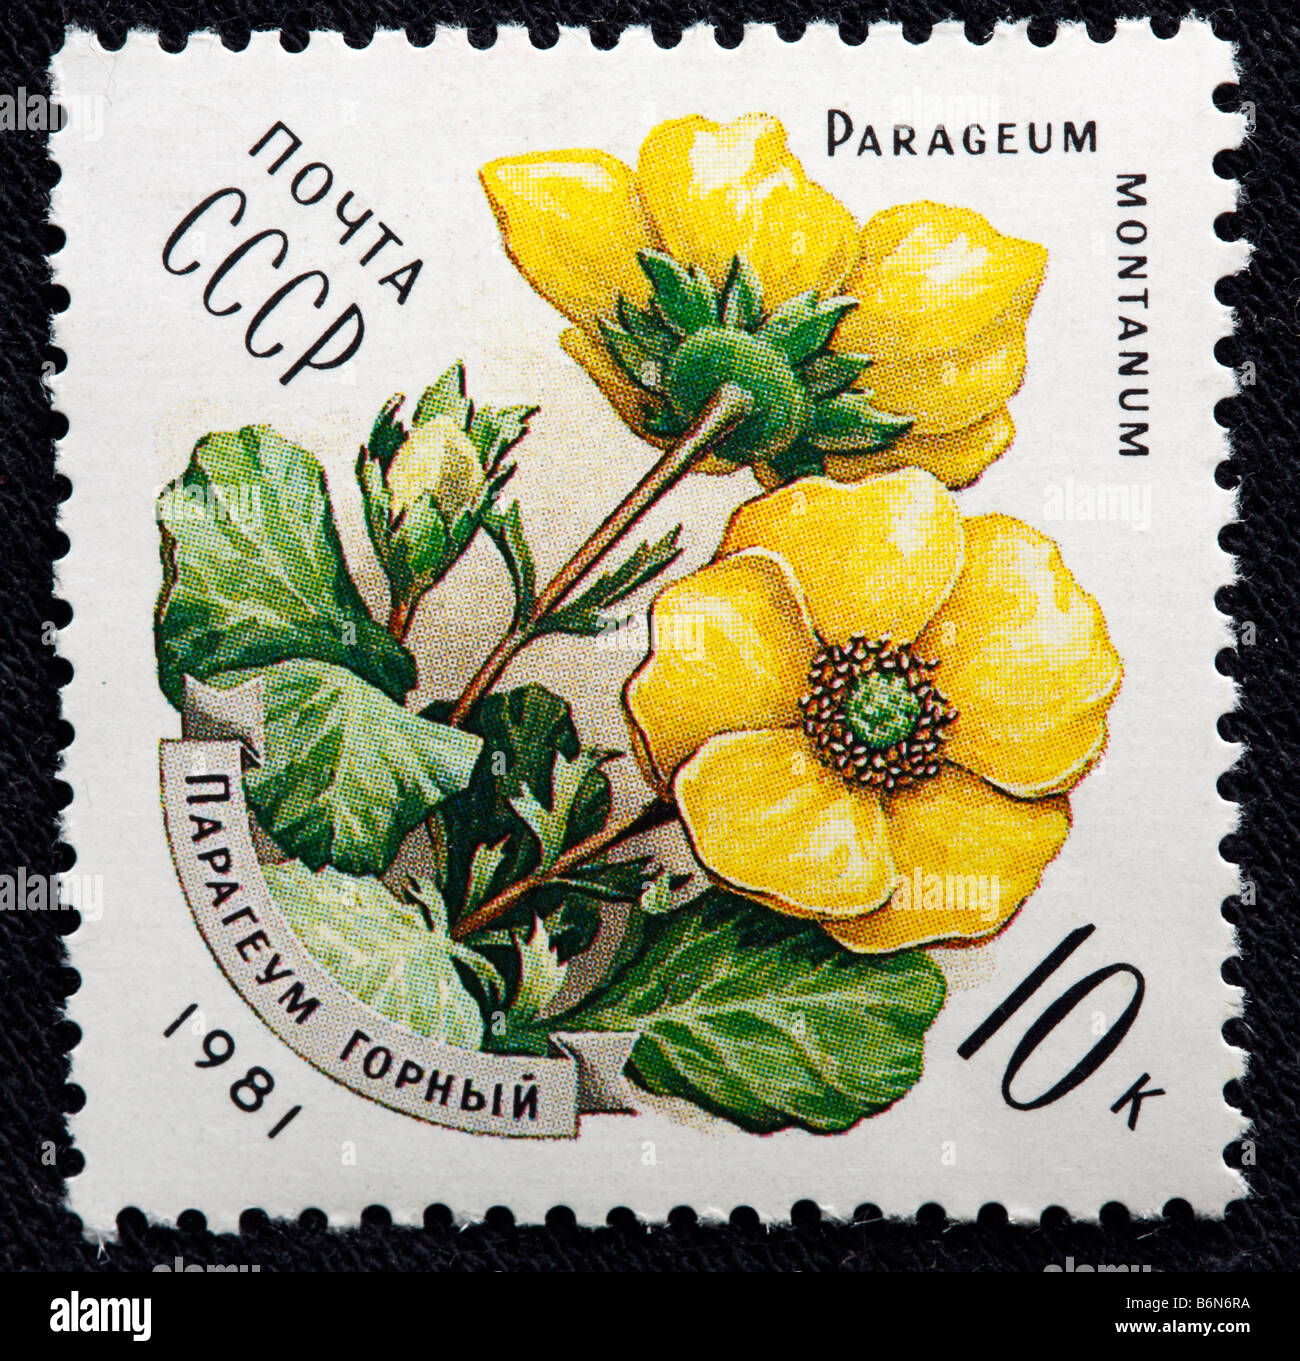 Parageum montanum, flower, postage stamp, USSR, Russia, 1981 Stock Photo